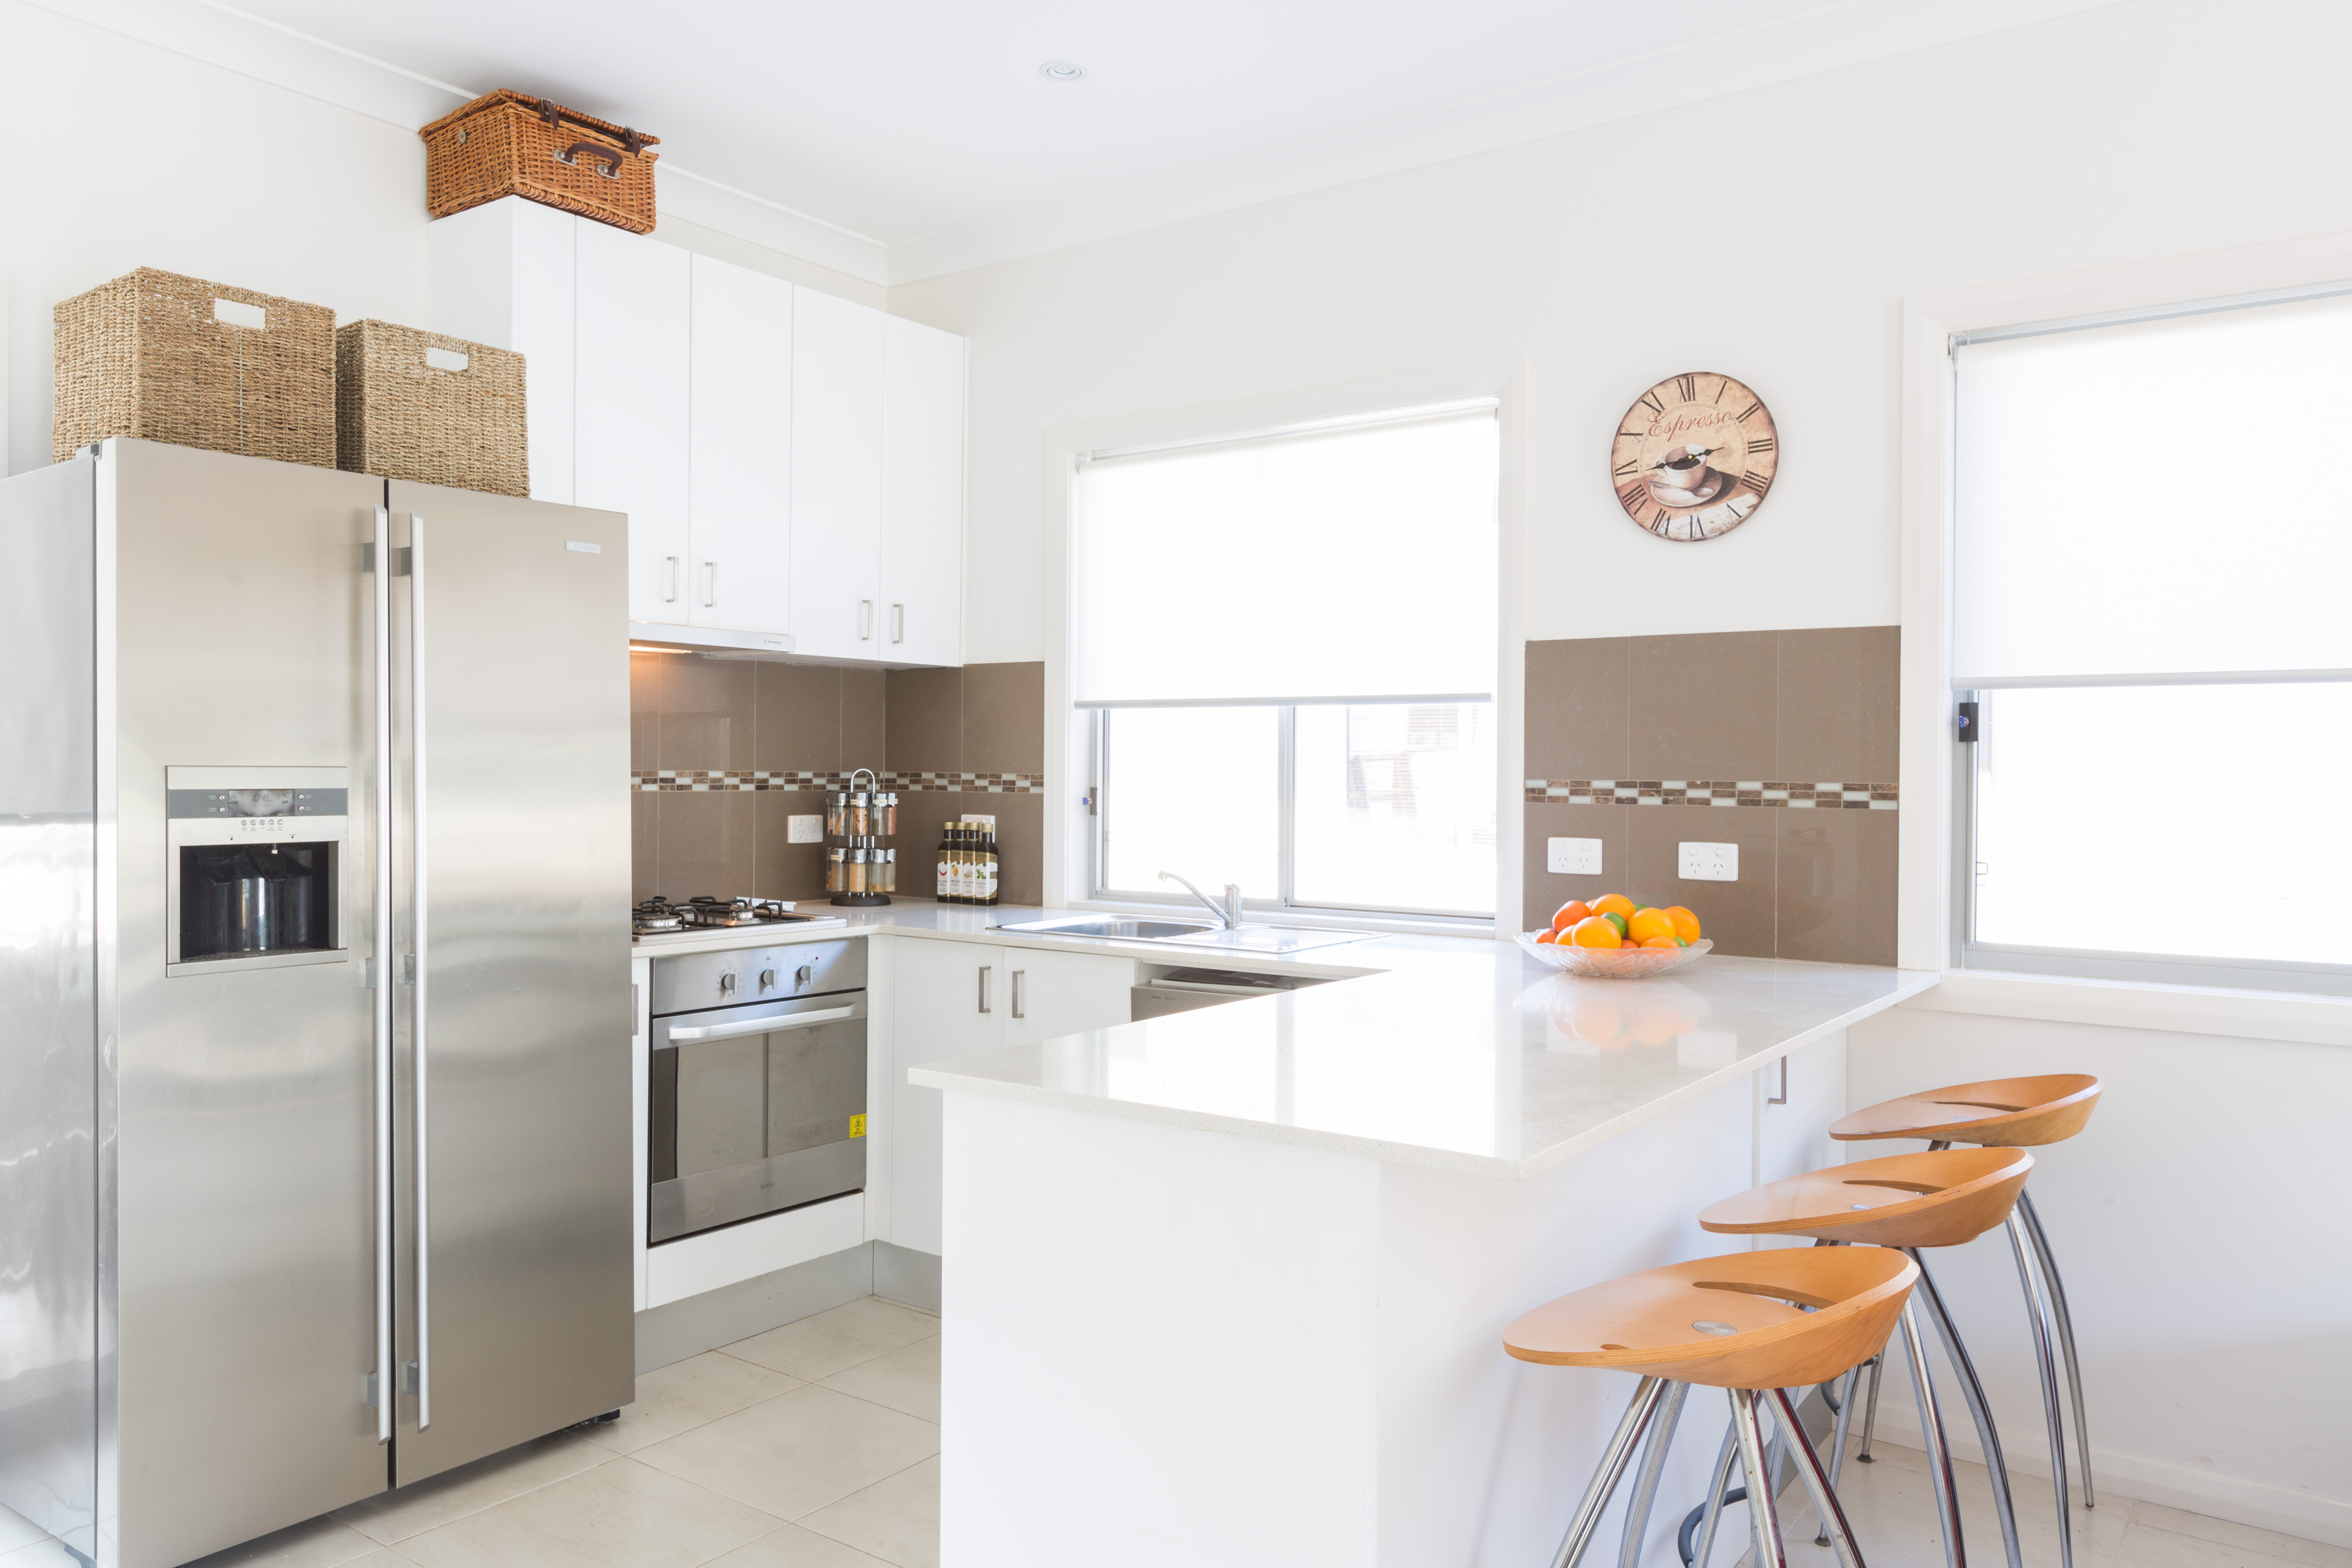  kitchen design for flats